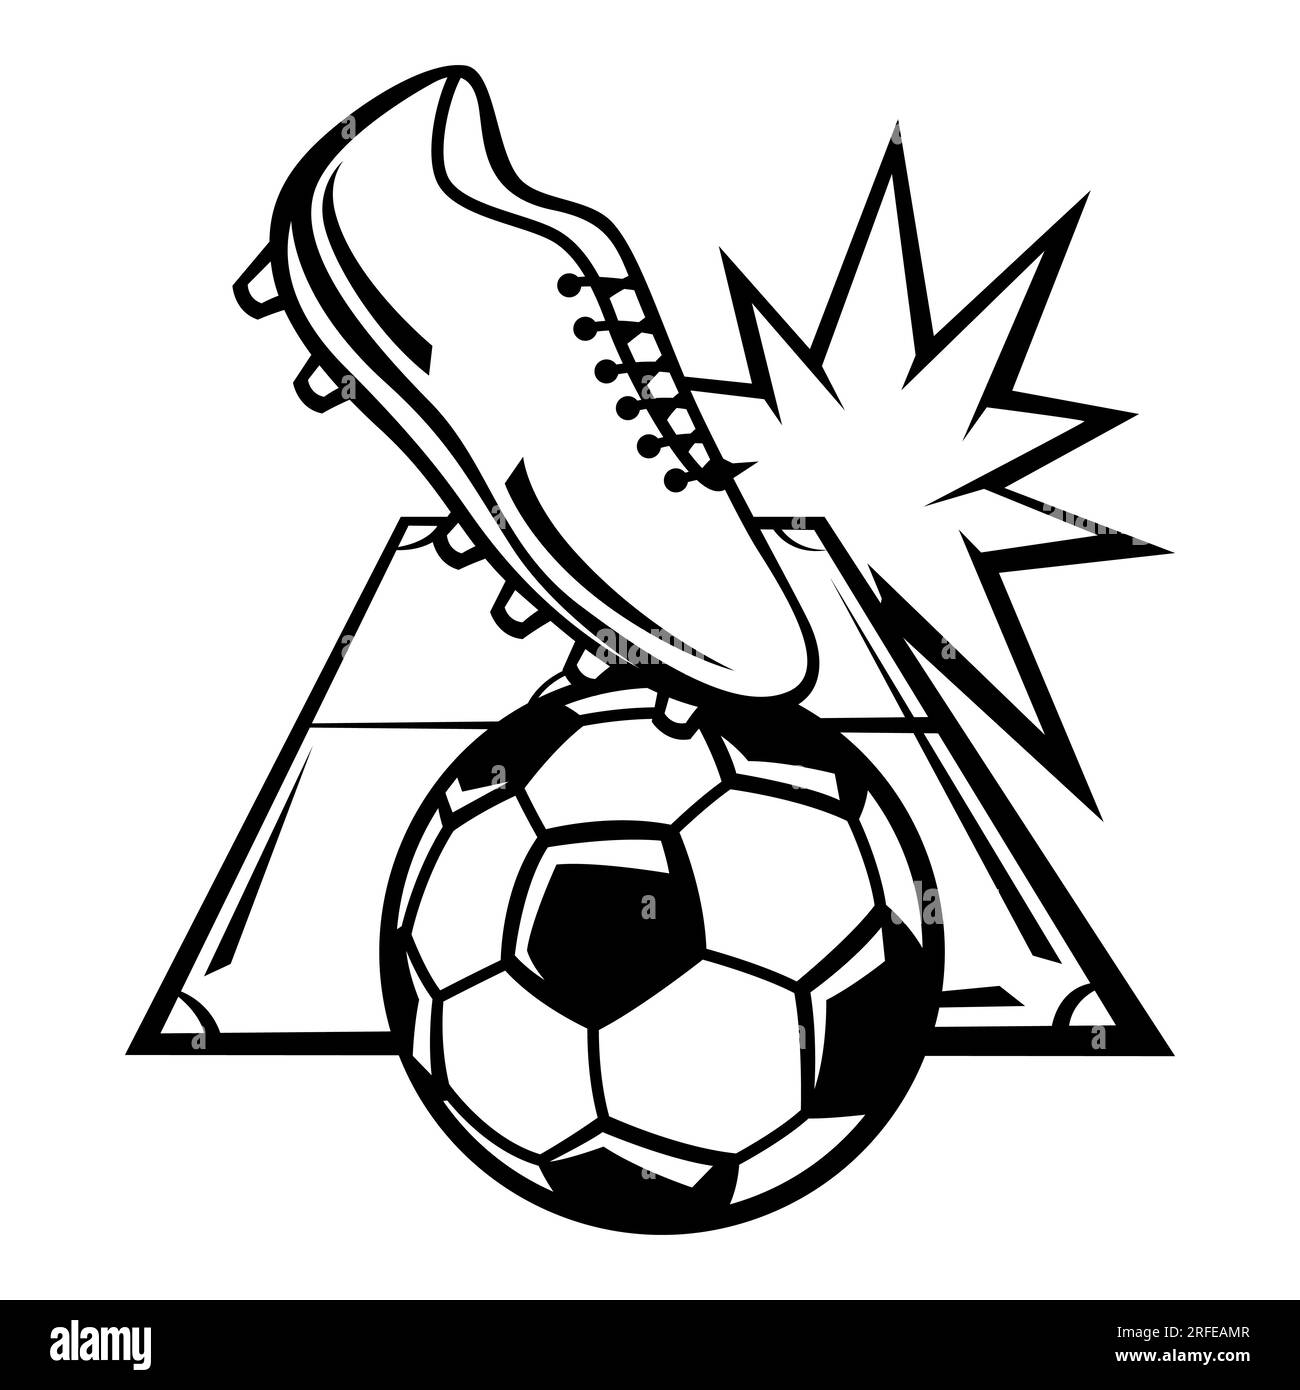 Emblem mit Fußballsymbolen. Football-Club-Label. Sportliche Illustration im Cartoon-Stil. Stock Vektor